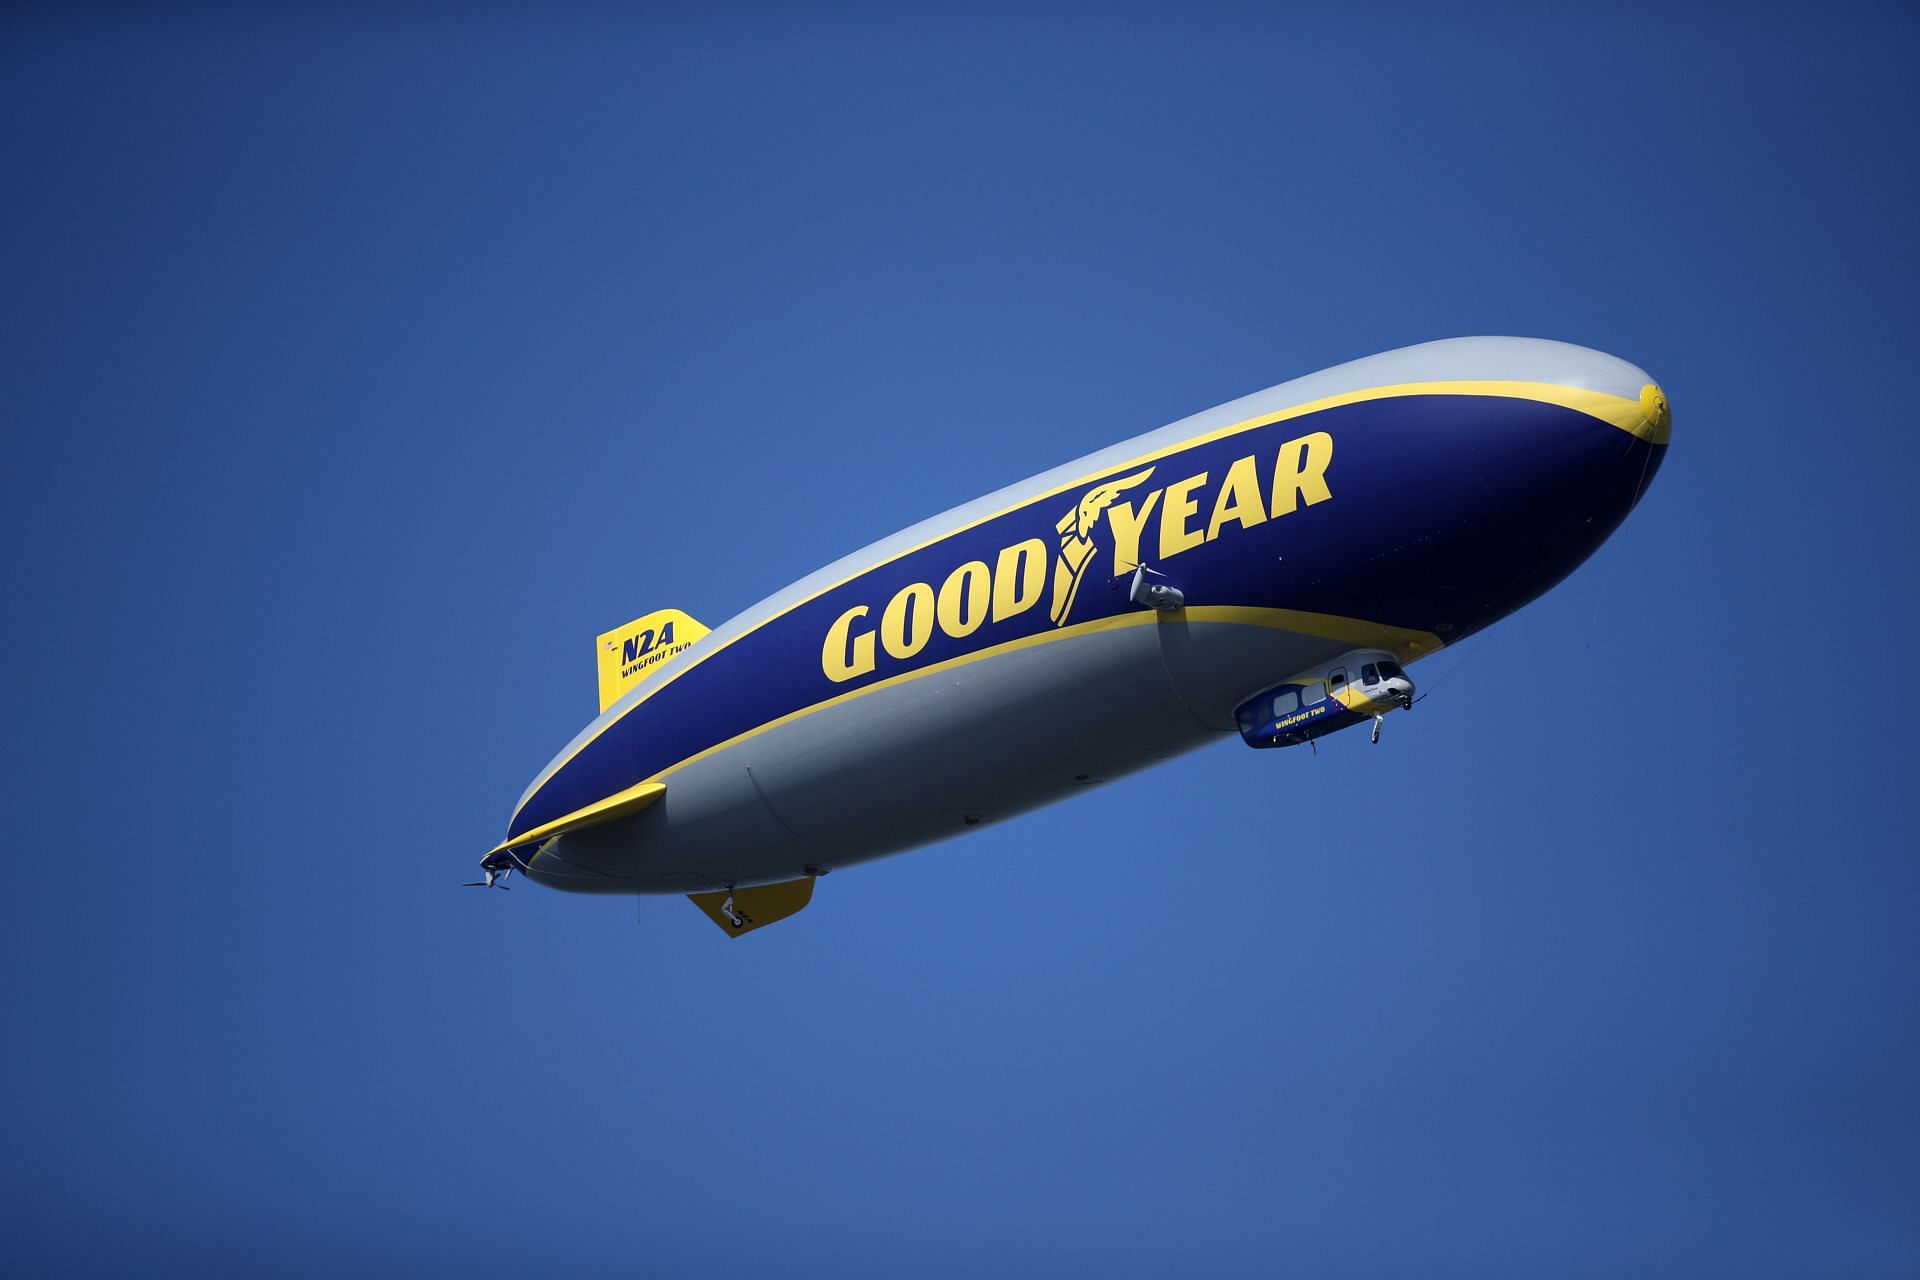 The Goodyear blimp flies overhead during the Cup Series Goodyear 400 at Darlington Raceway